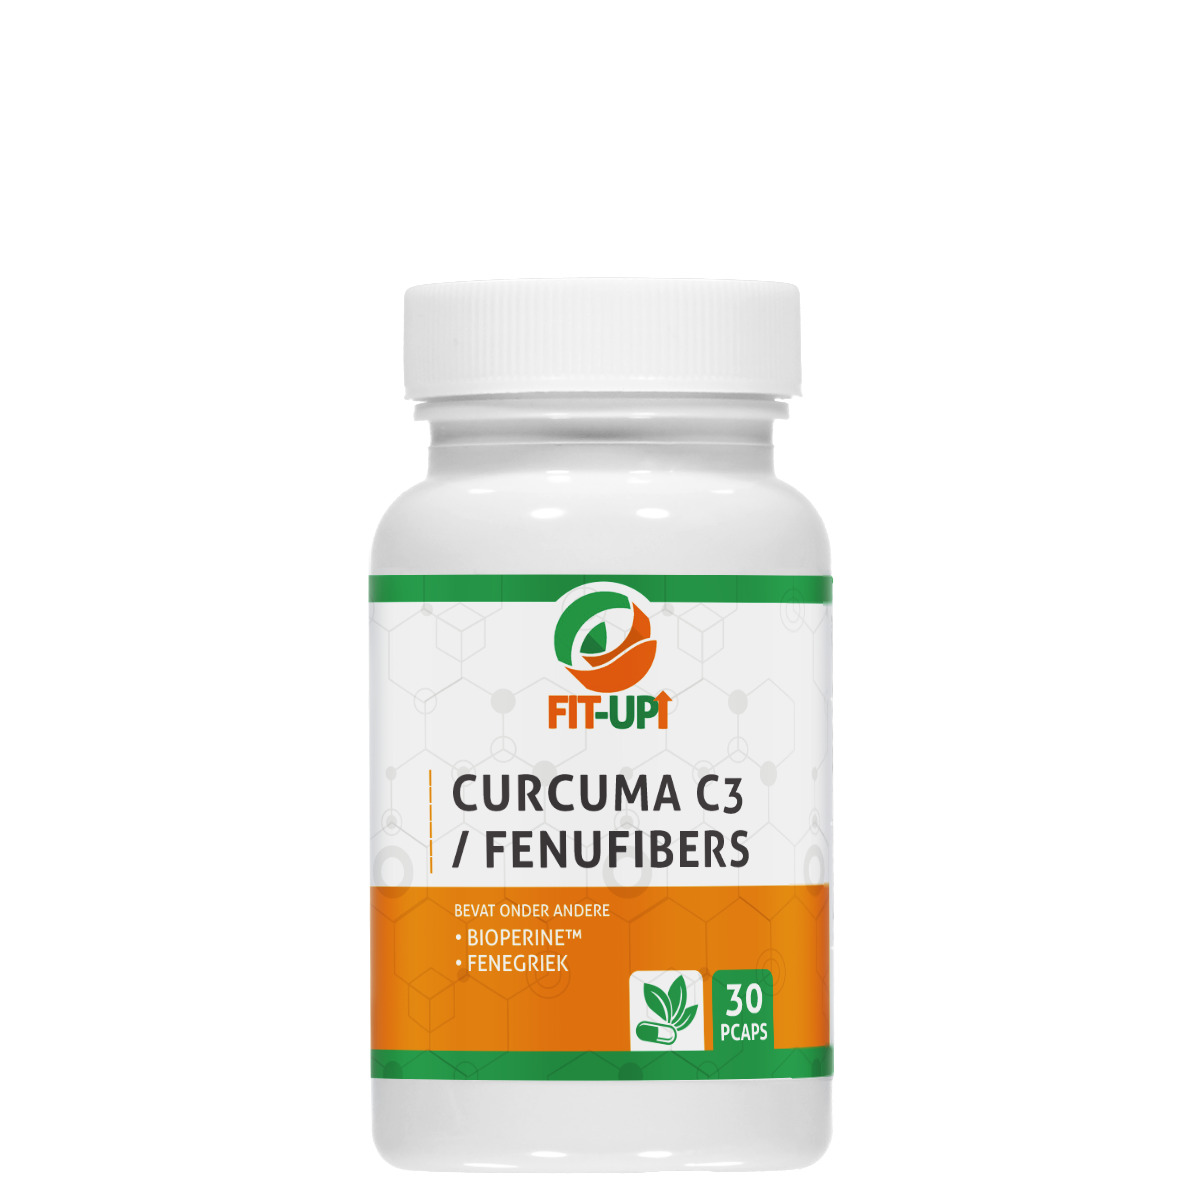 Curcuma C3 & Fenufibers - 30 caps